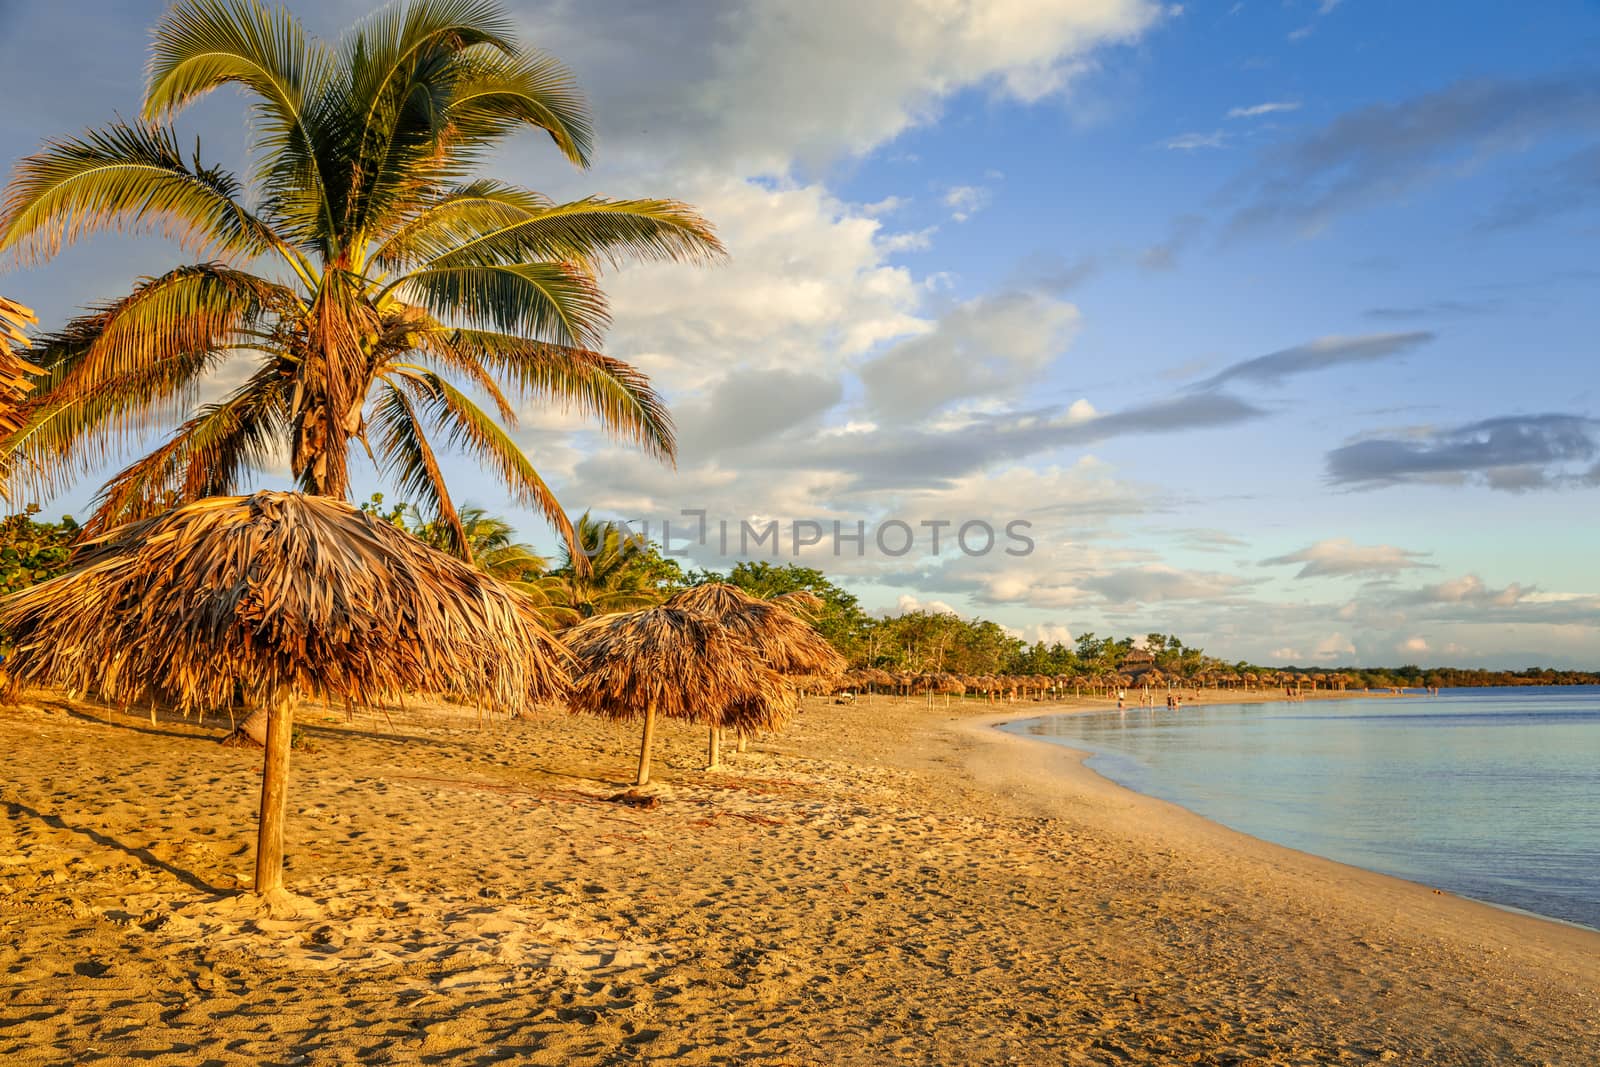 Rancho Luna sandy beach with palms and straw umbrellas on the shore, Cienfuegos, Cuba